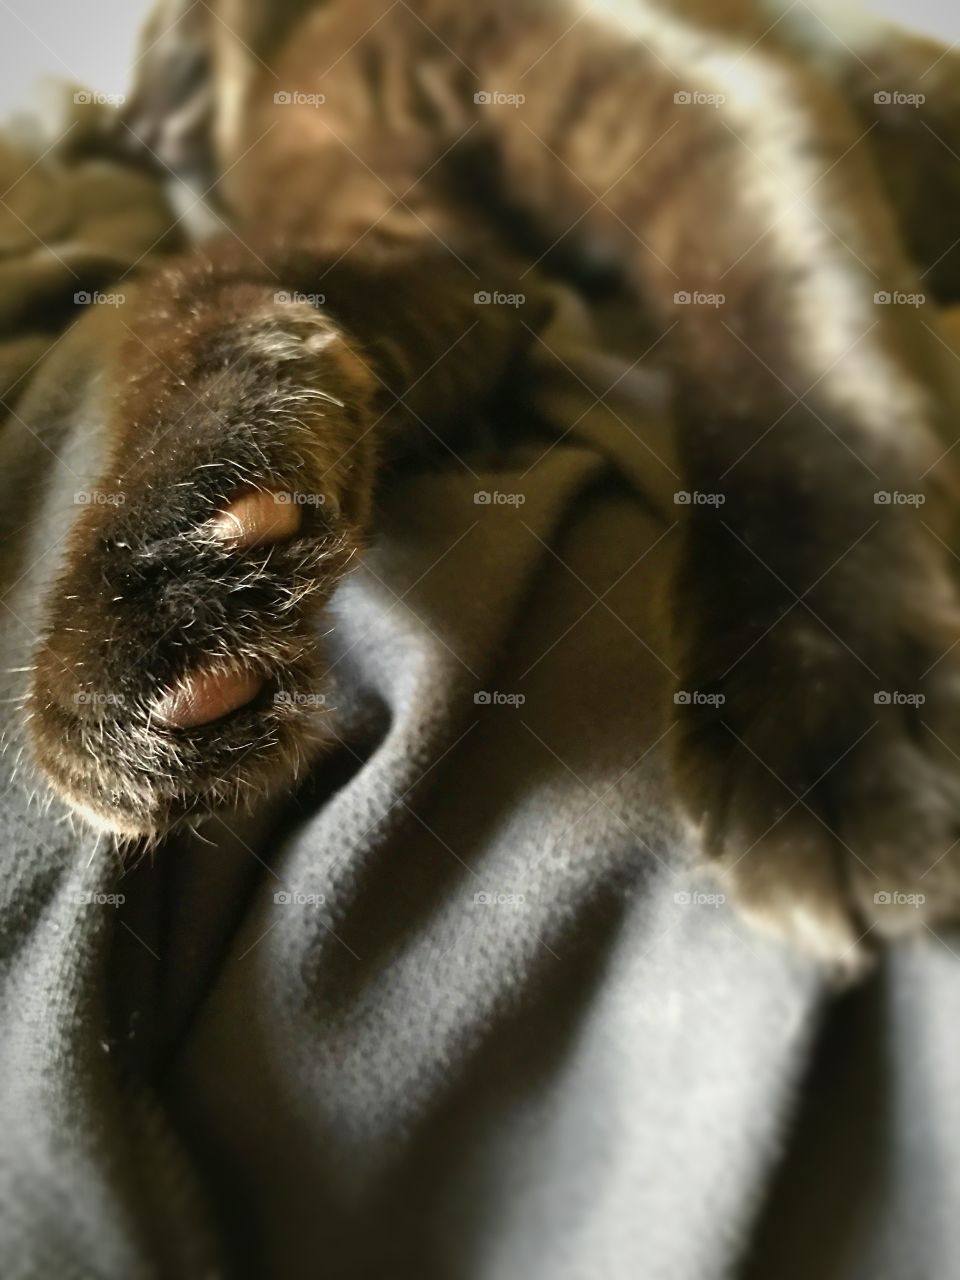 Kitten paws while kitten dreams